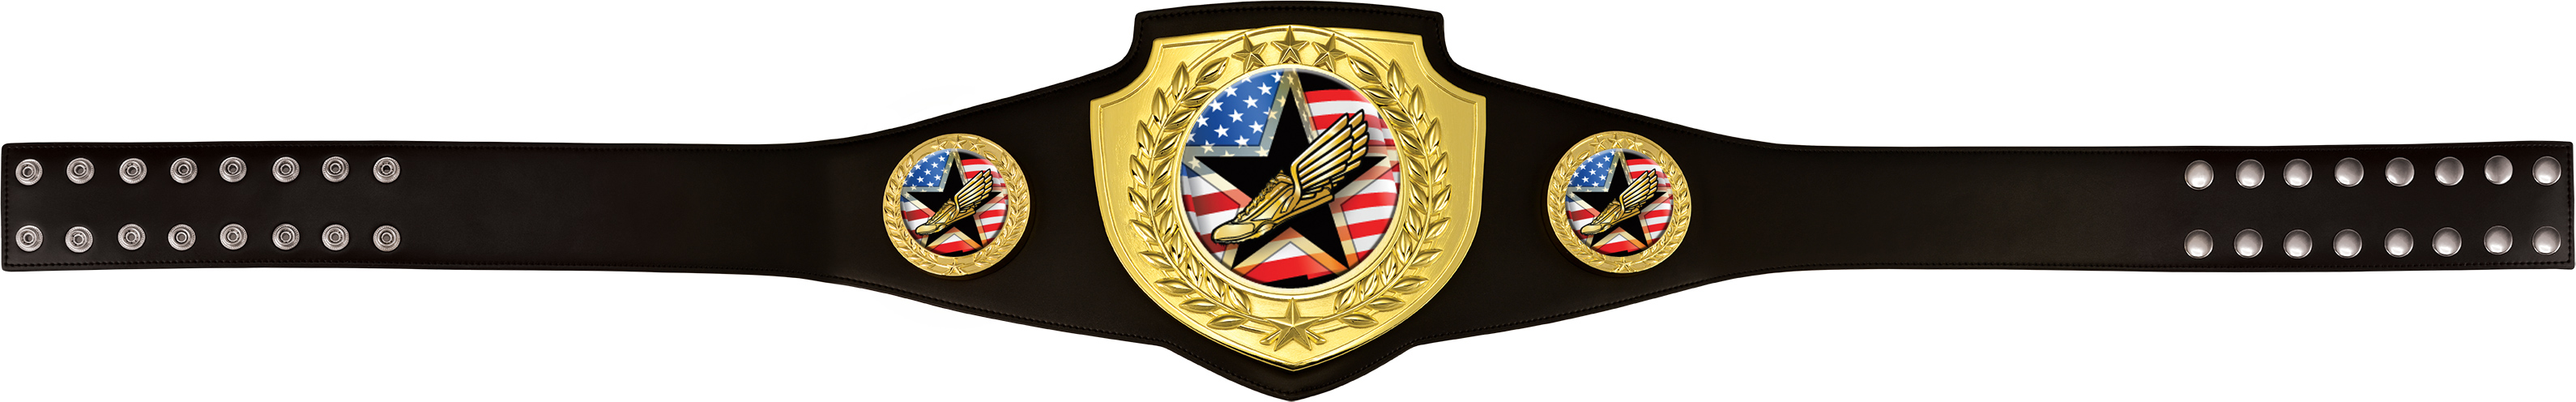 Track Champion Shield Award Belt